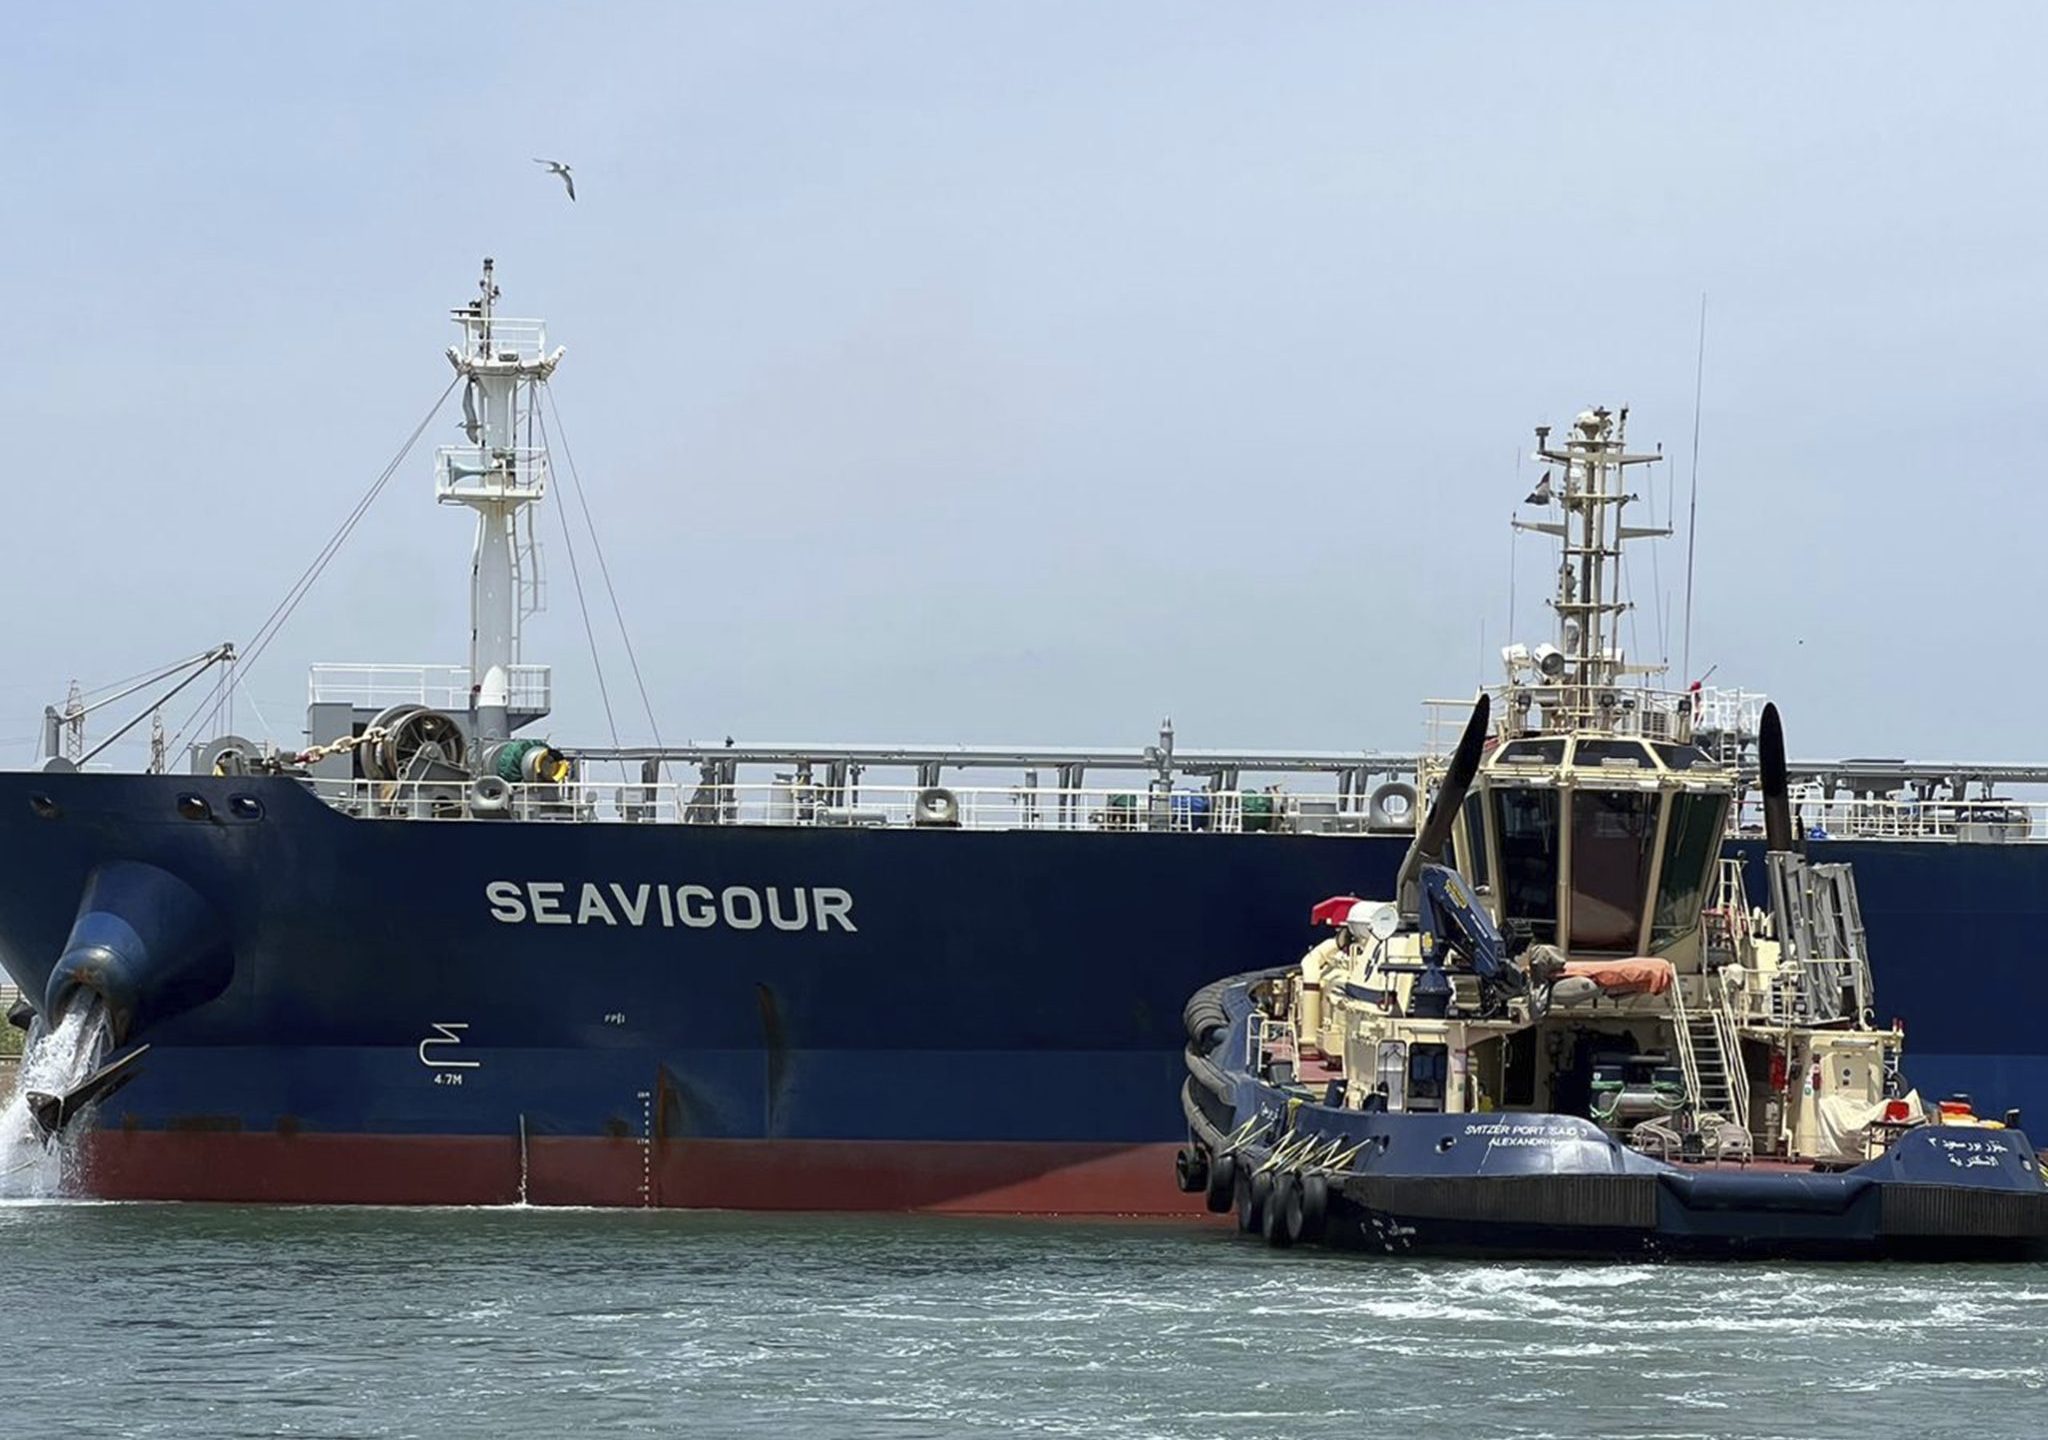 Seavigour, die vaart onder de Maltese vlag, was op weg van Rusland naar China.